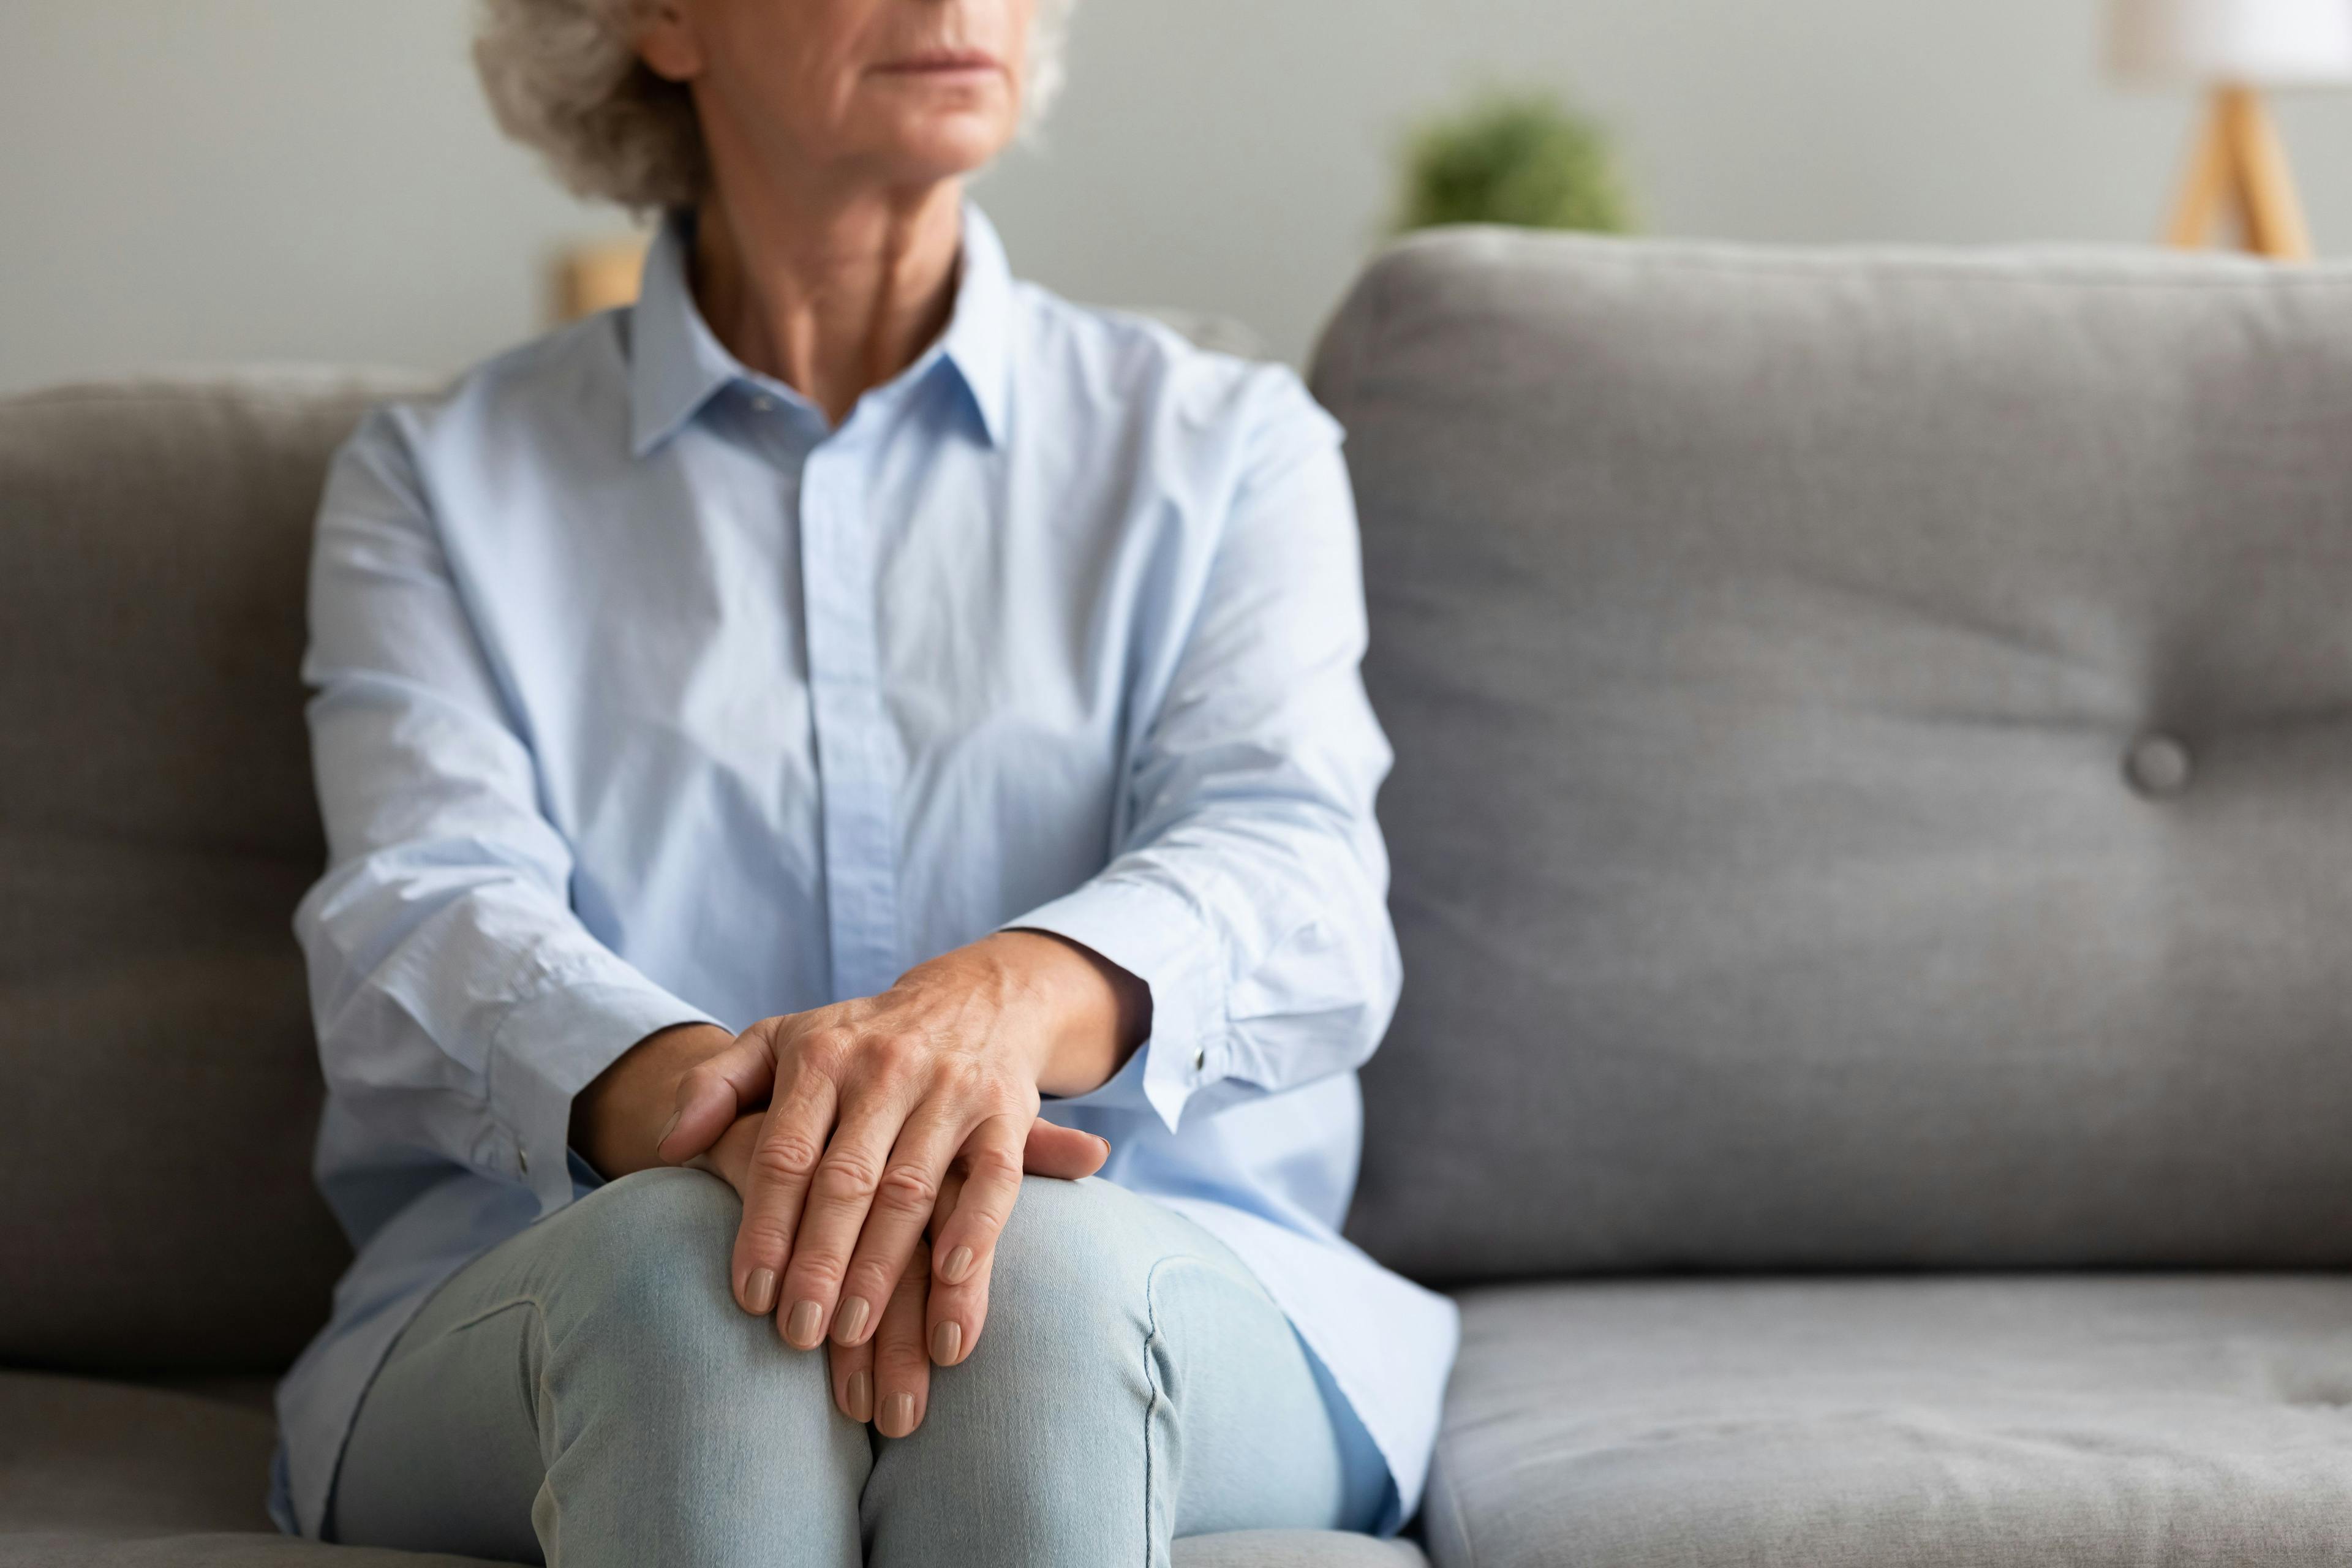 Review Describes Evidence Regarding Deprescribing Interventions for Older Patients